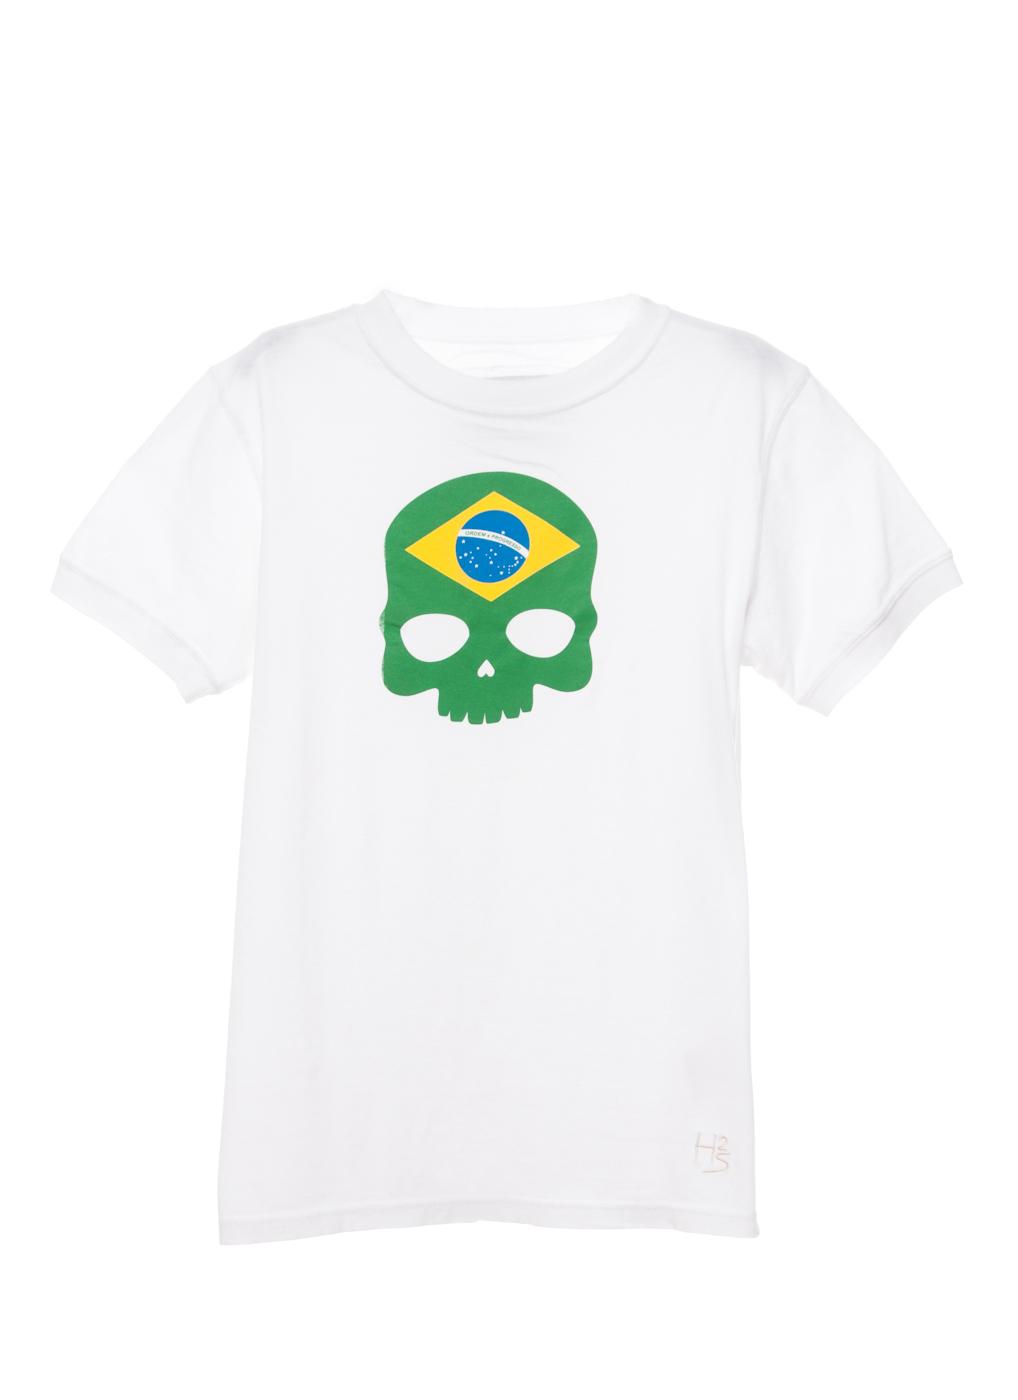 Foto Camiseta Hydrogen Scalf Brasil foto 249769